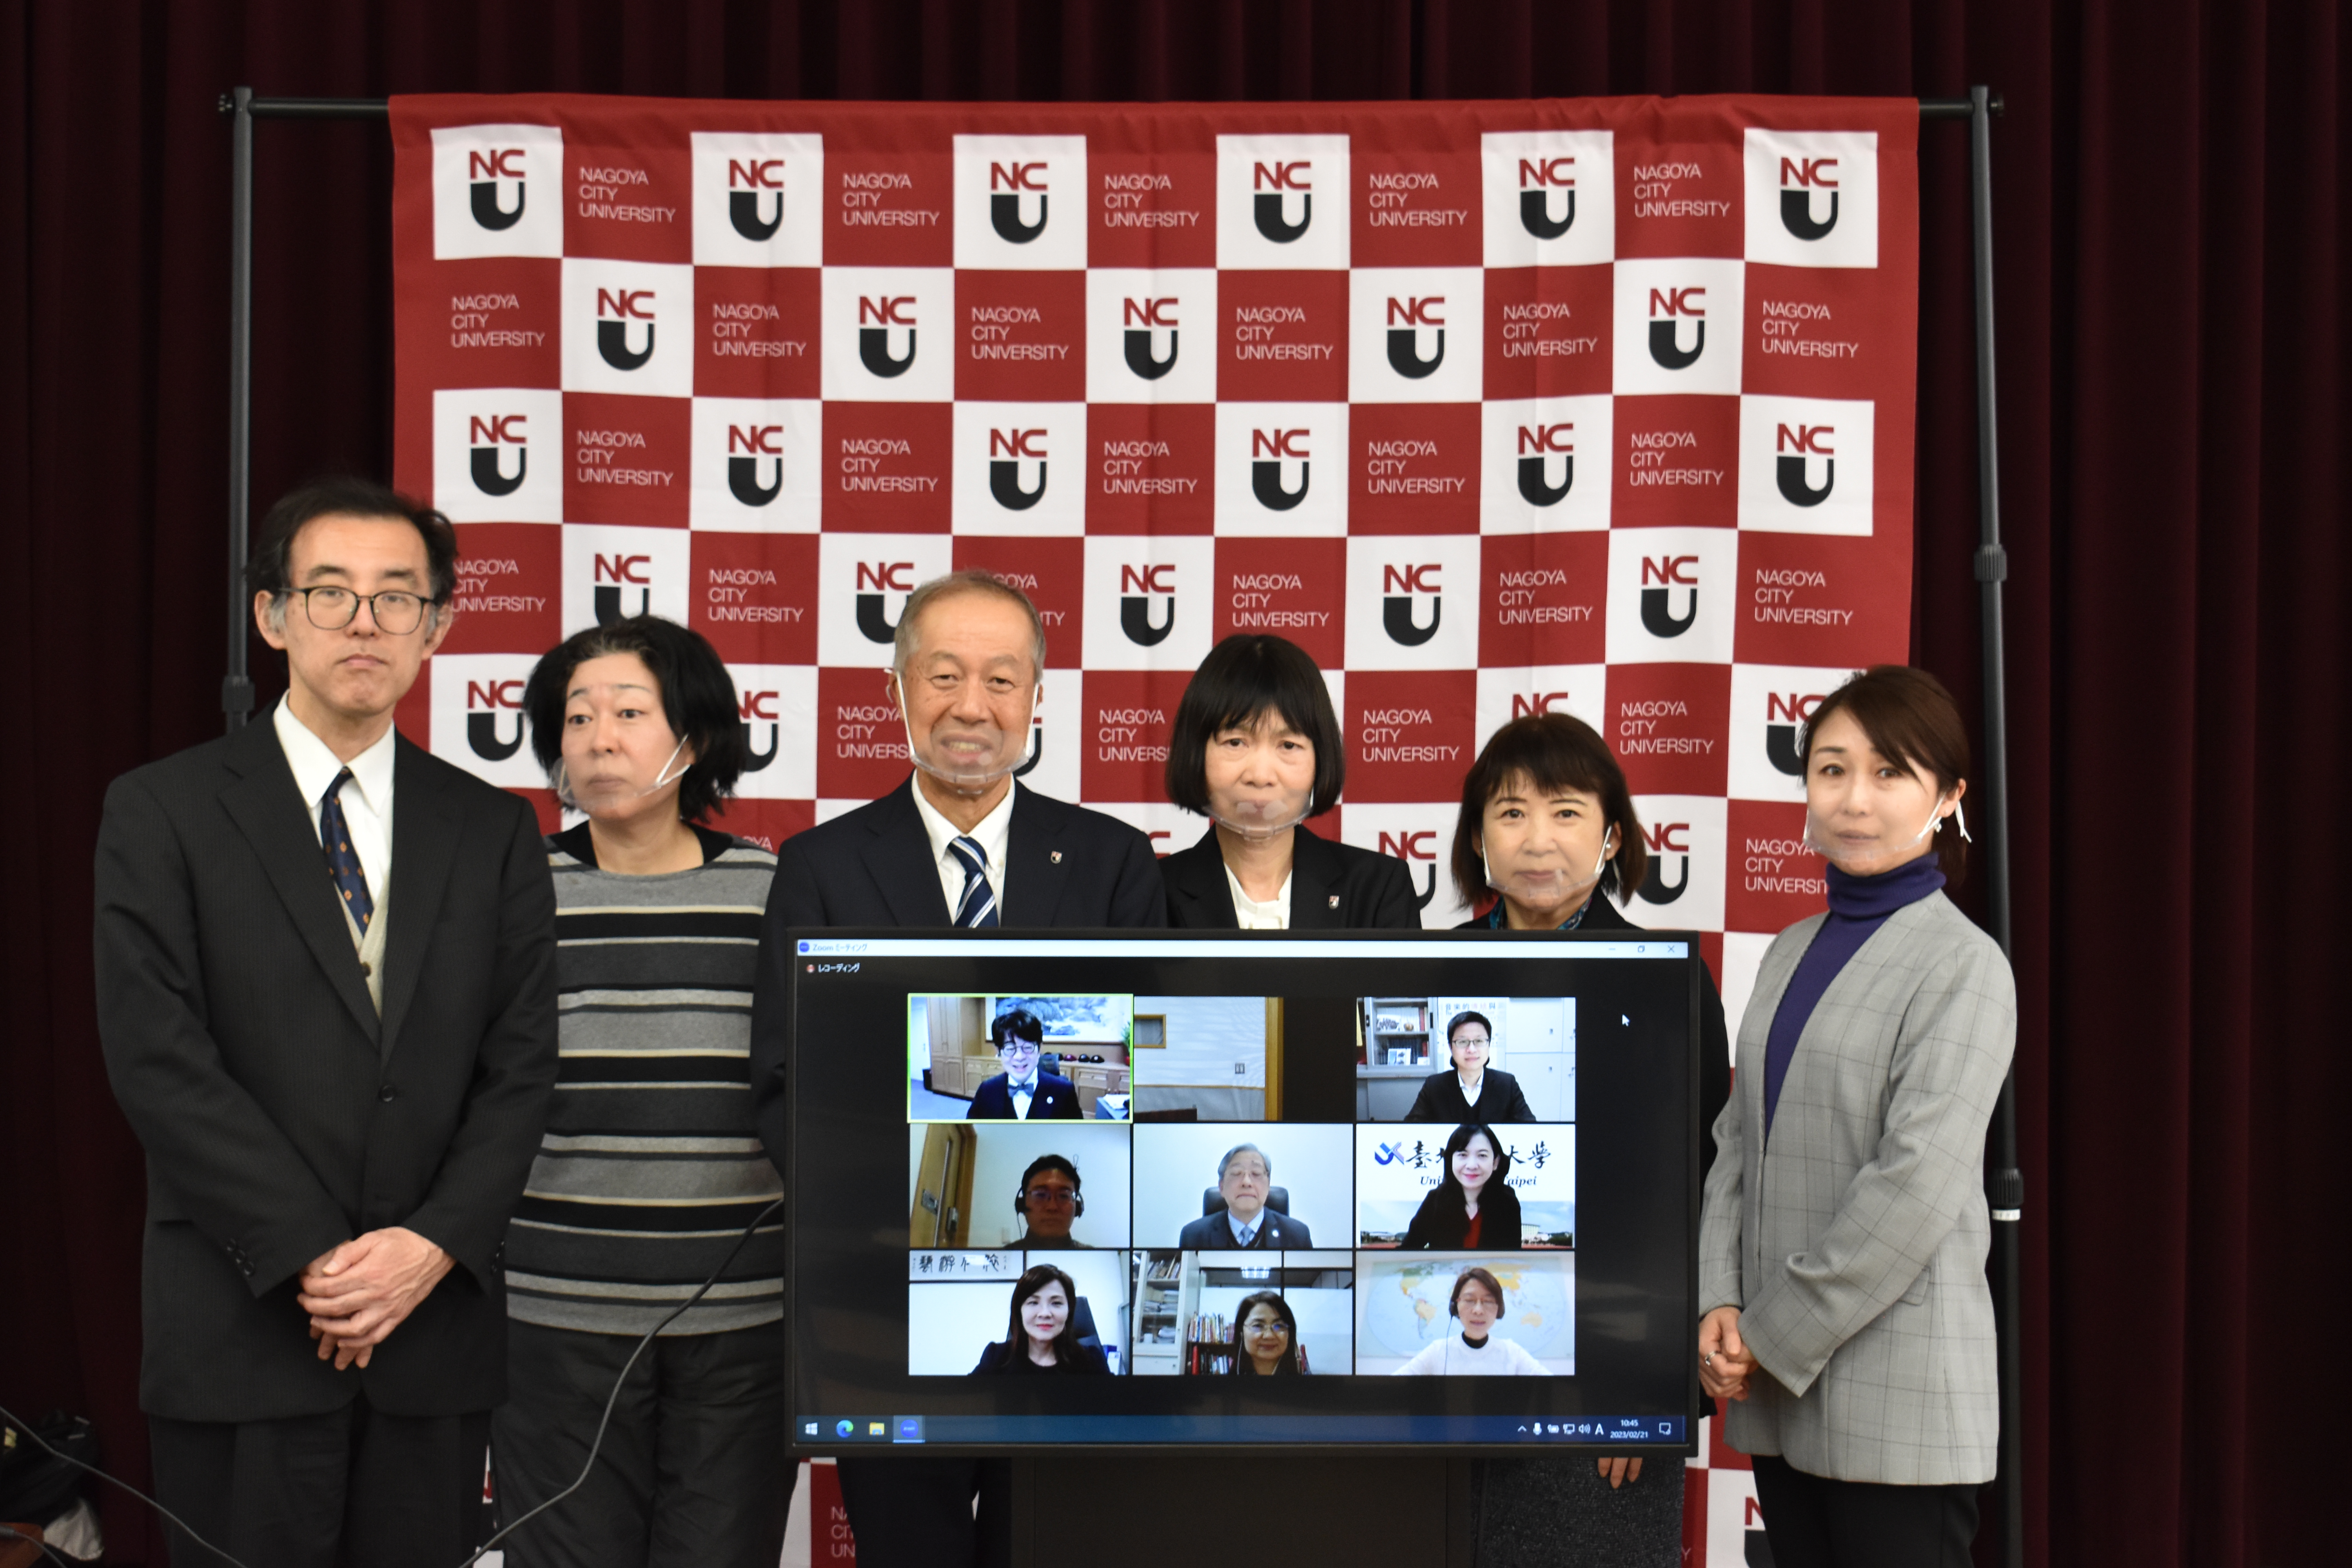 Photo Session at NCU. From left to right, Prof. Atsushi Yamada, Dr. Mika Yamada, Dr. Kiyofumi Asai, Dr. Kiyoko Yokoyama, Dr. Hisako Nonaka, Dr. Shoko Shiina